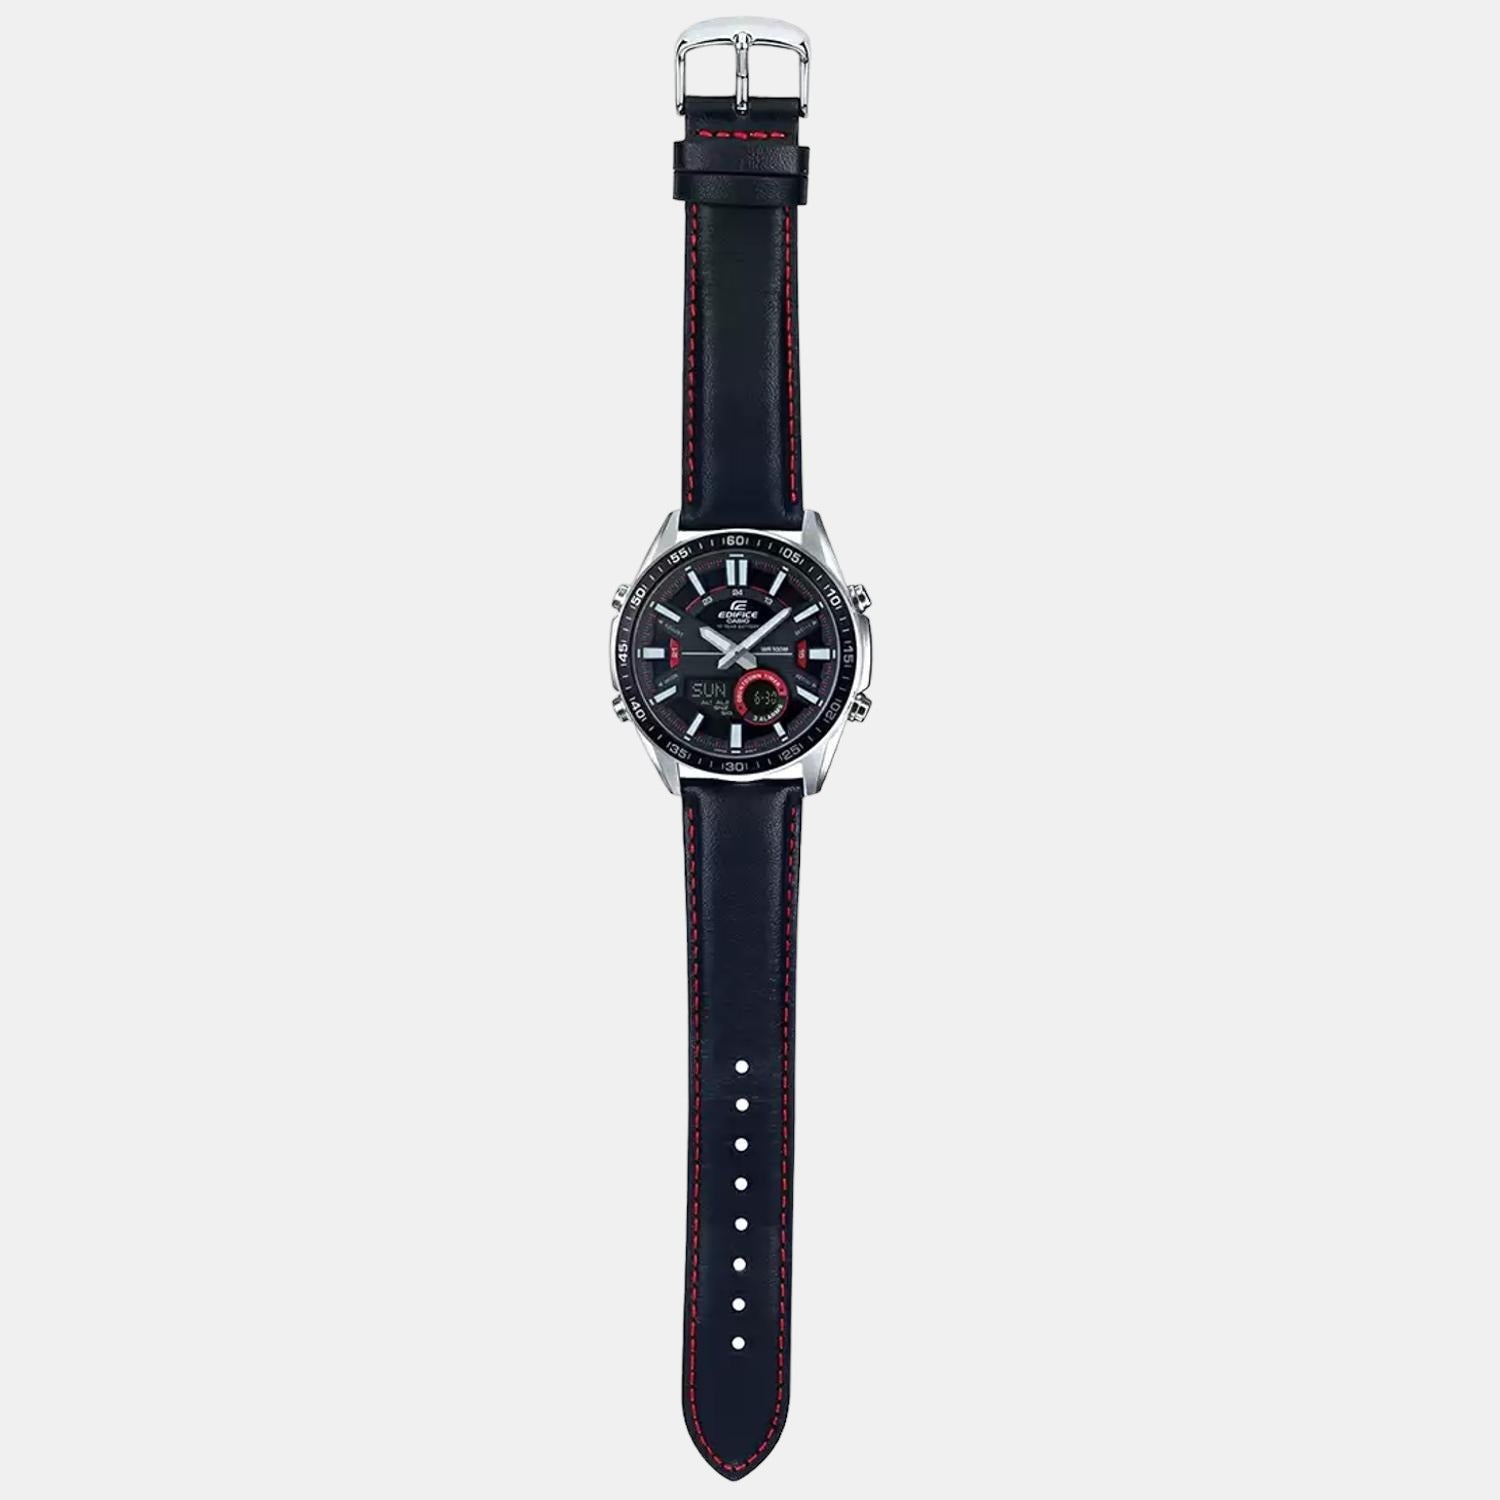 casio-stainless-steel-black-red-analog-digital-mens-watch-ex441